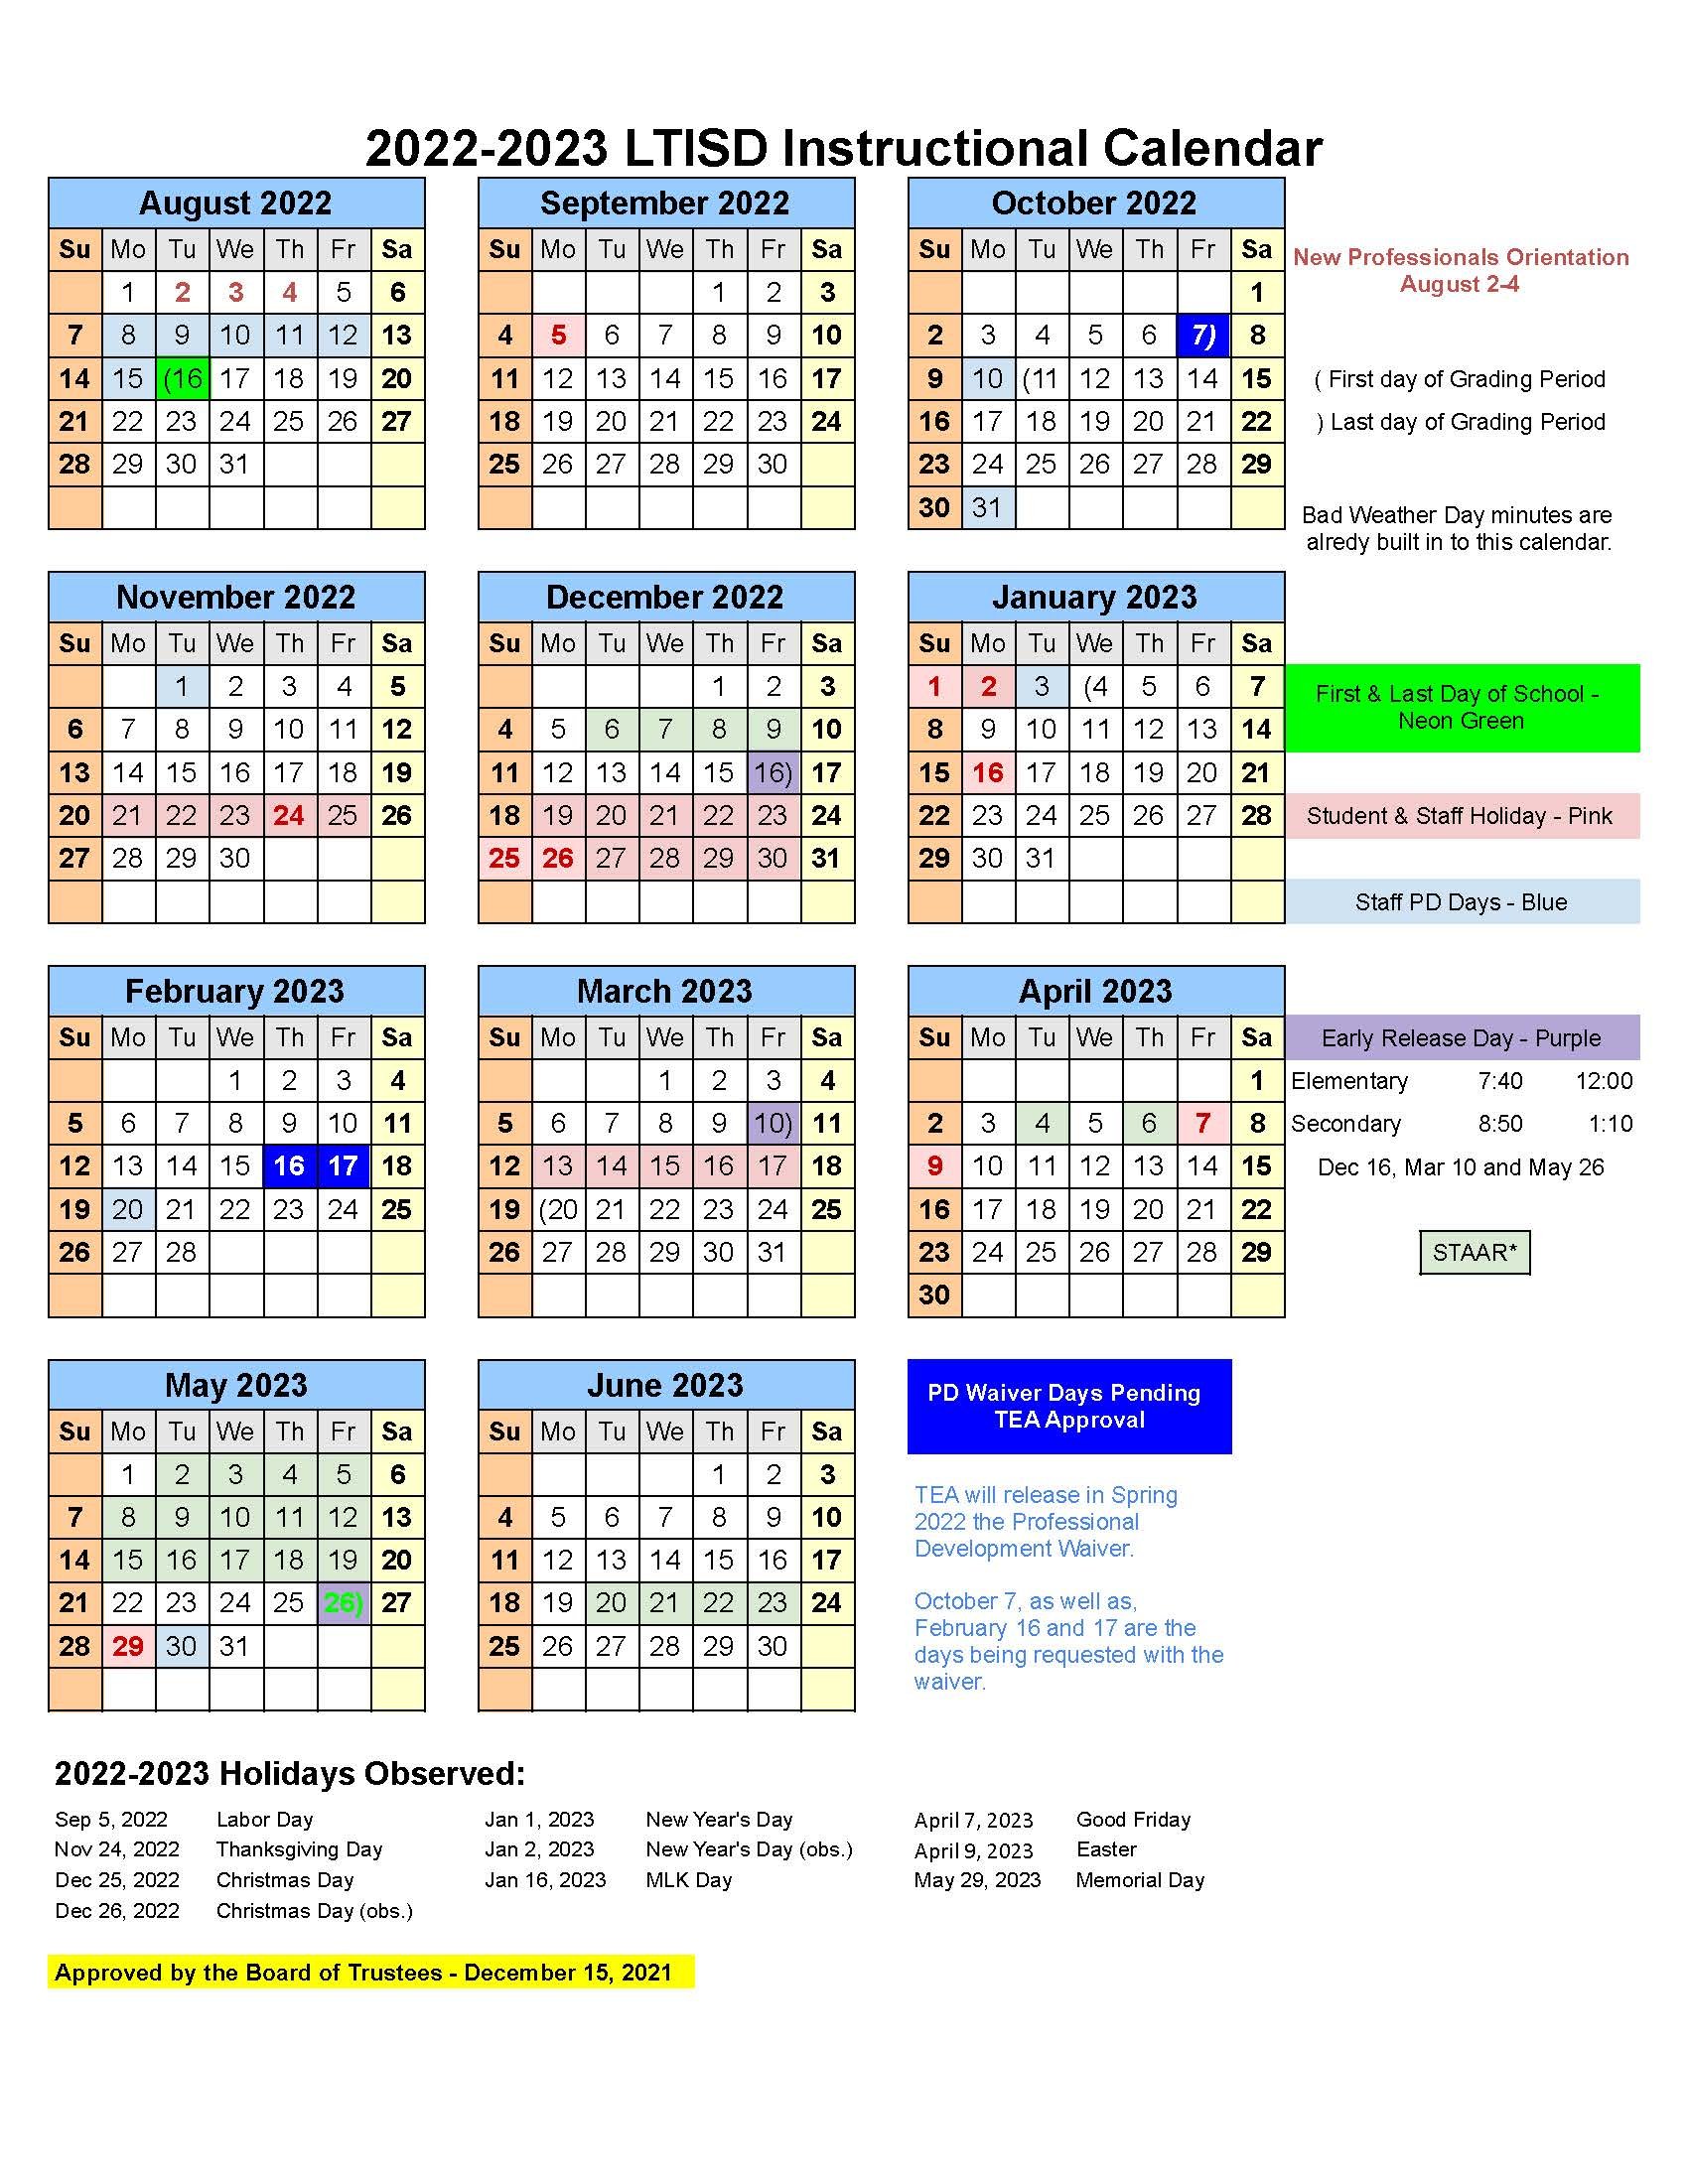 school-board-approves-2022-2023-instructional-calendar-currents